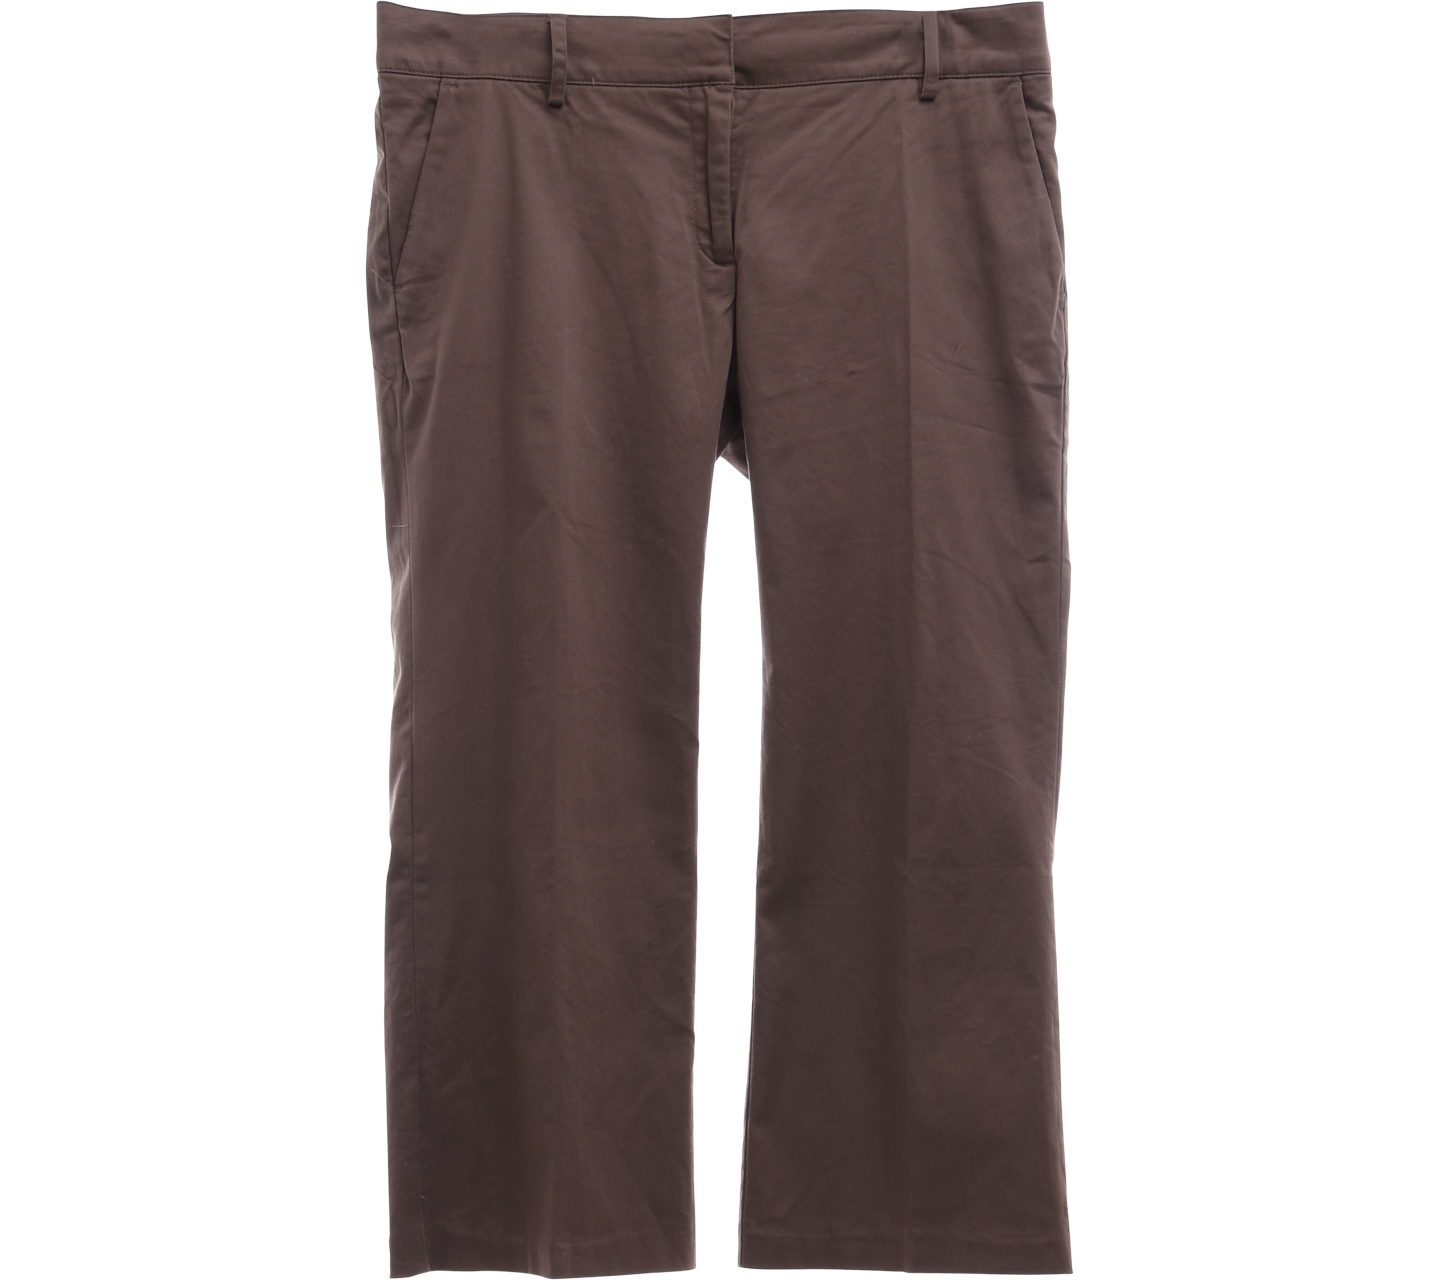 Zara dark brown long pants